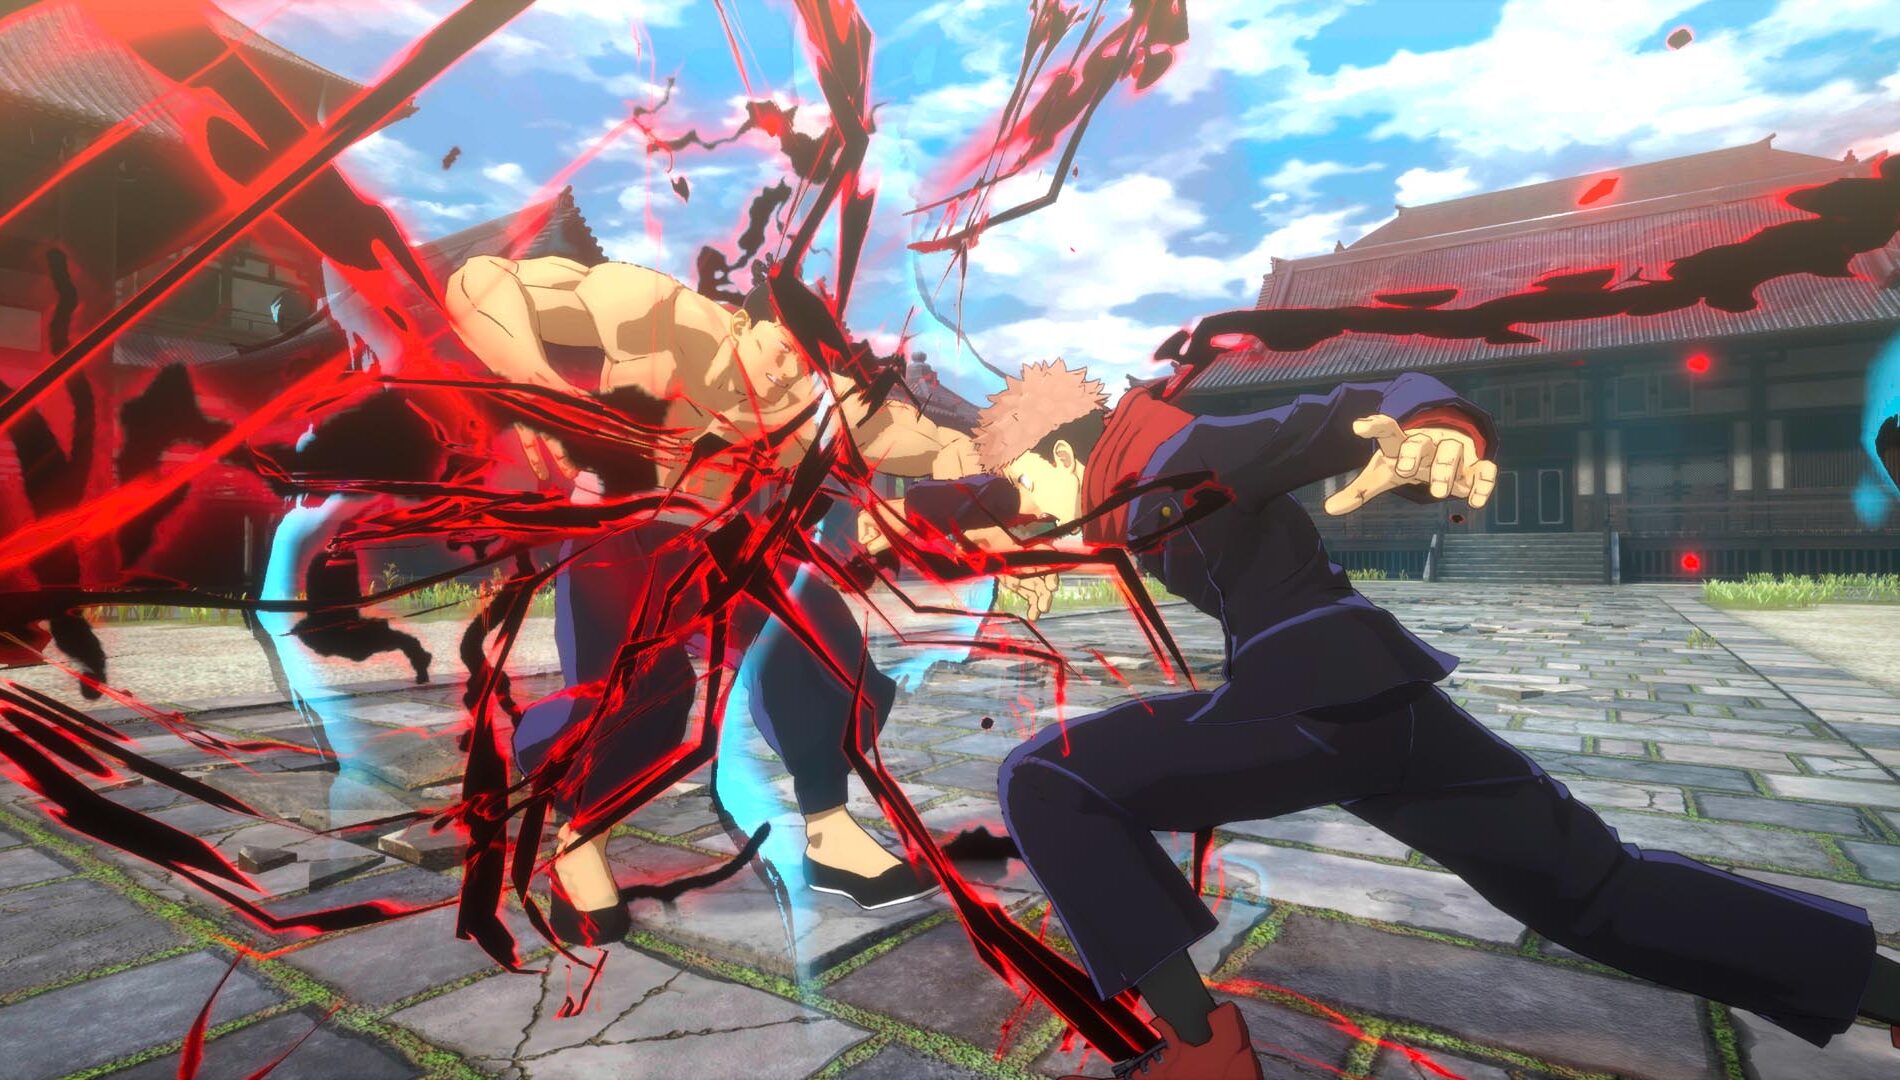 Jujutsu Kaisen Cursed Clash Brawler Game Launches February 2024